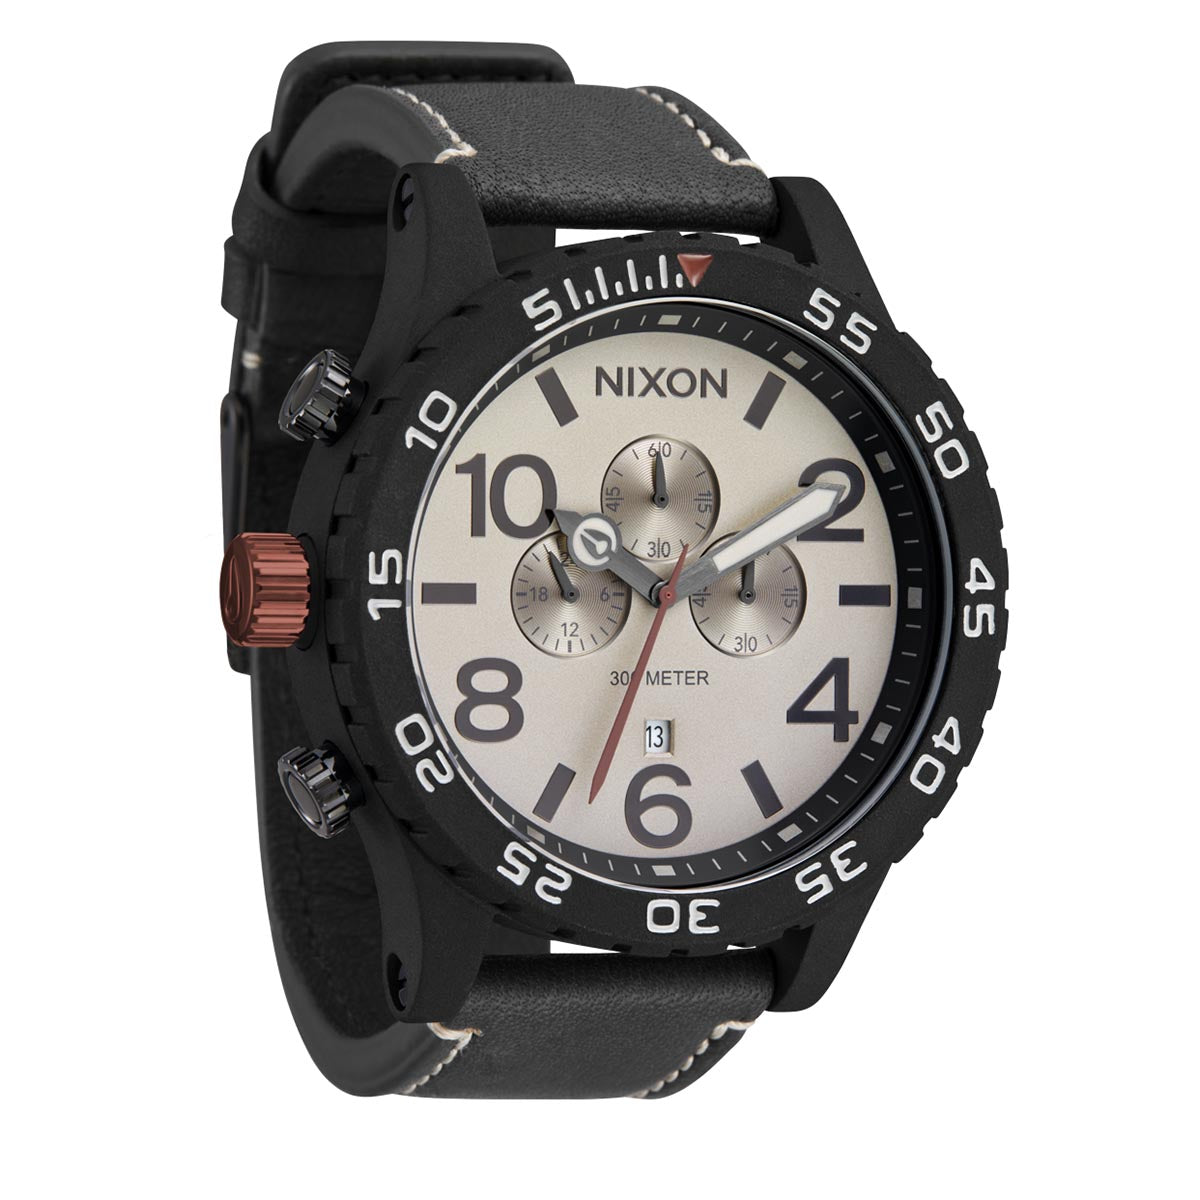 Nixon 51-30 Chrono Leather Watch - Black/Pumice/Charcoal image 1